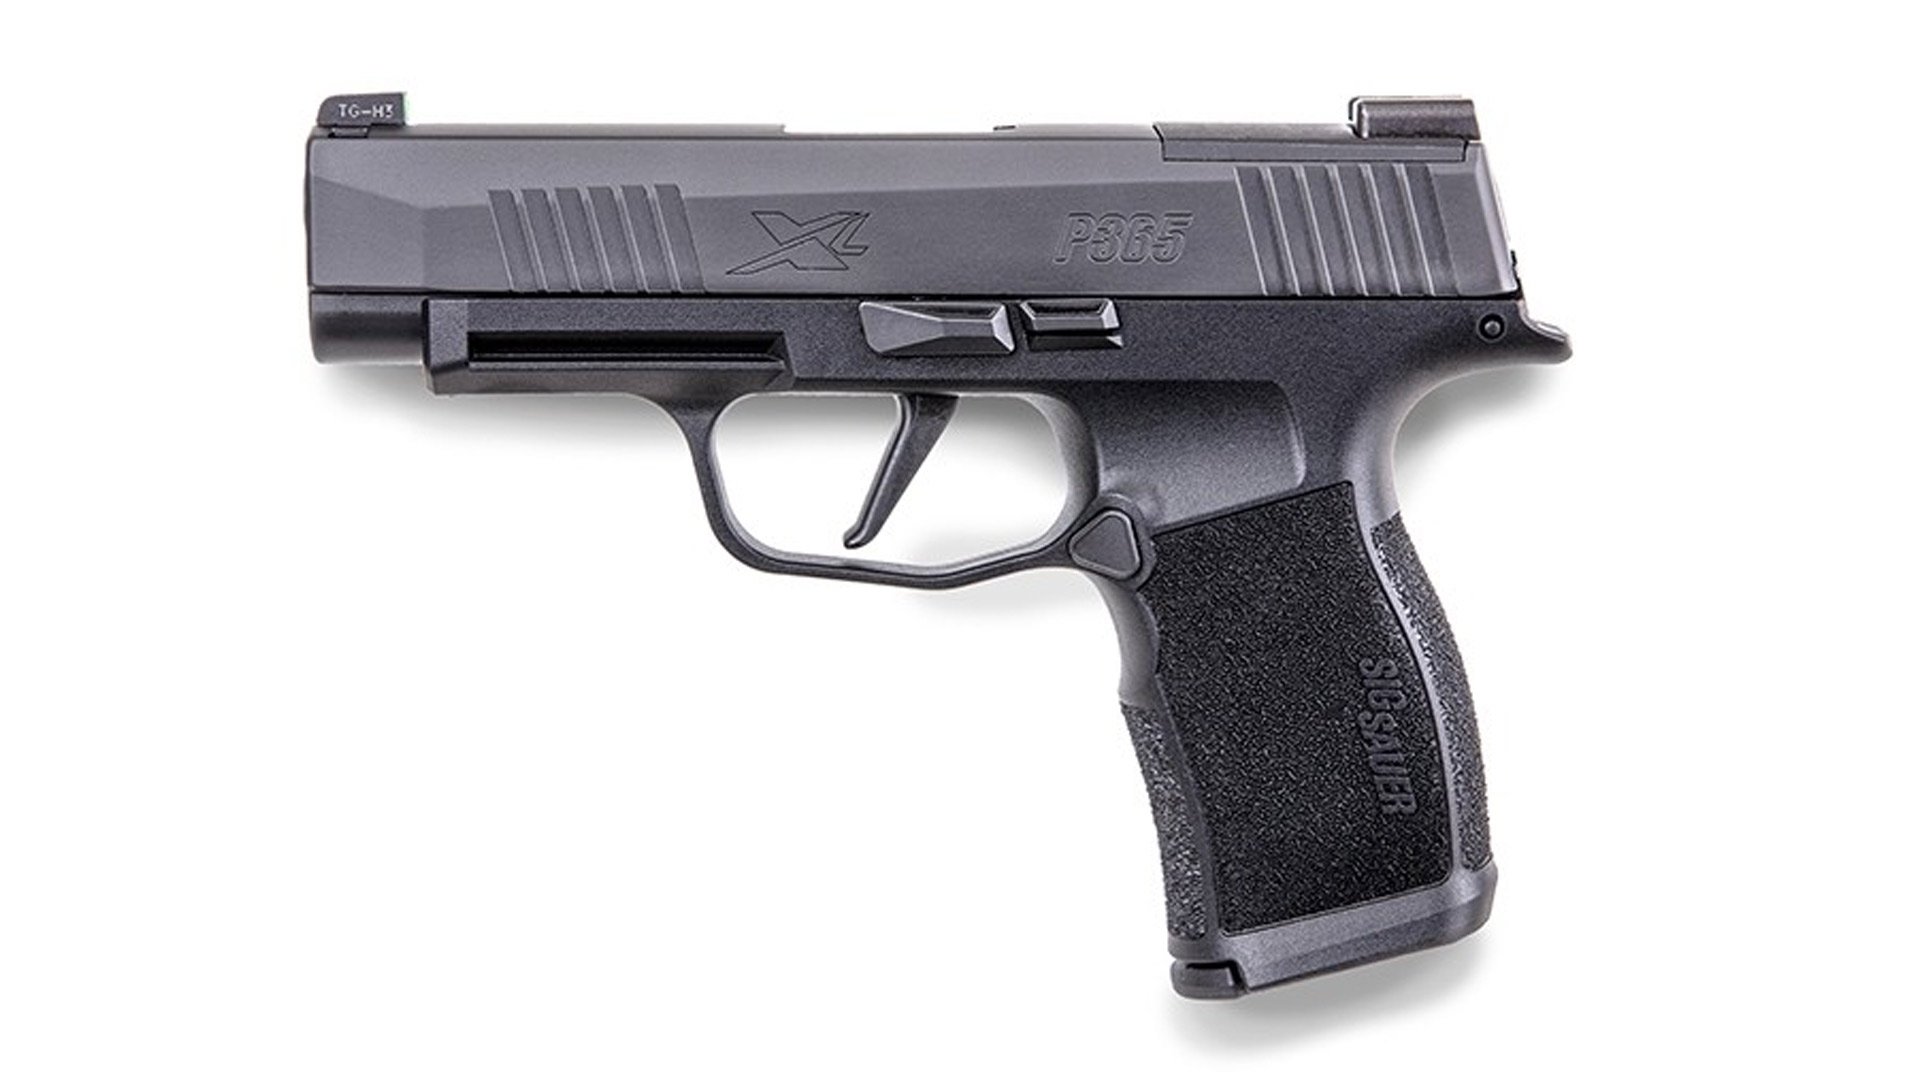 SiG Sauer P365 XL 9mm pistol